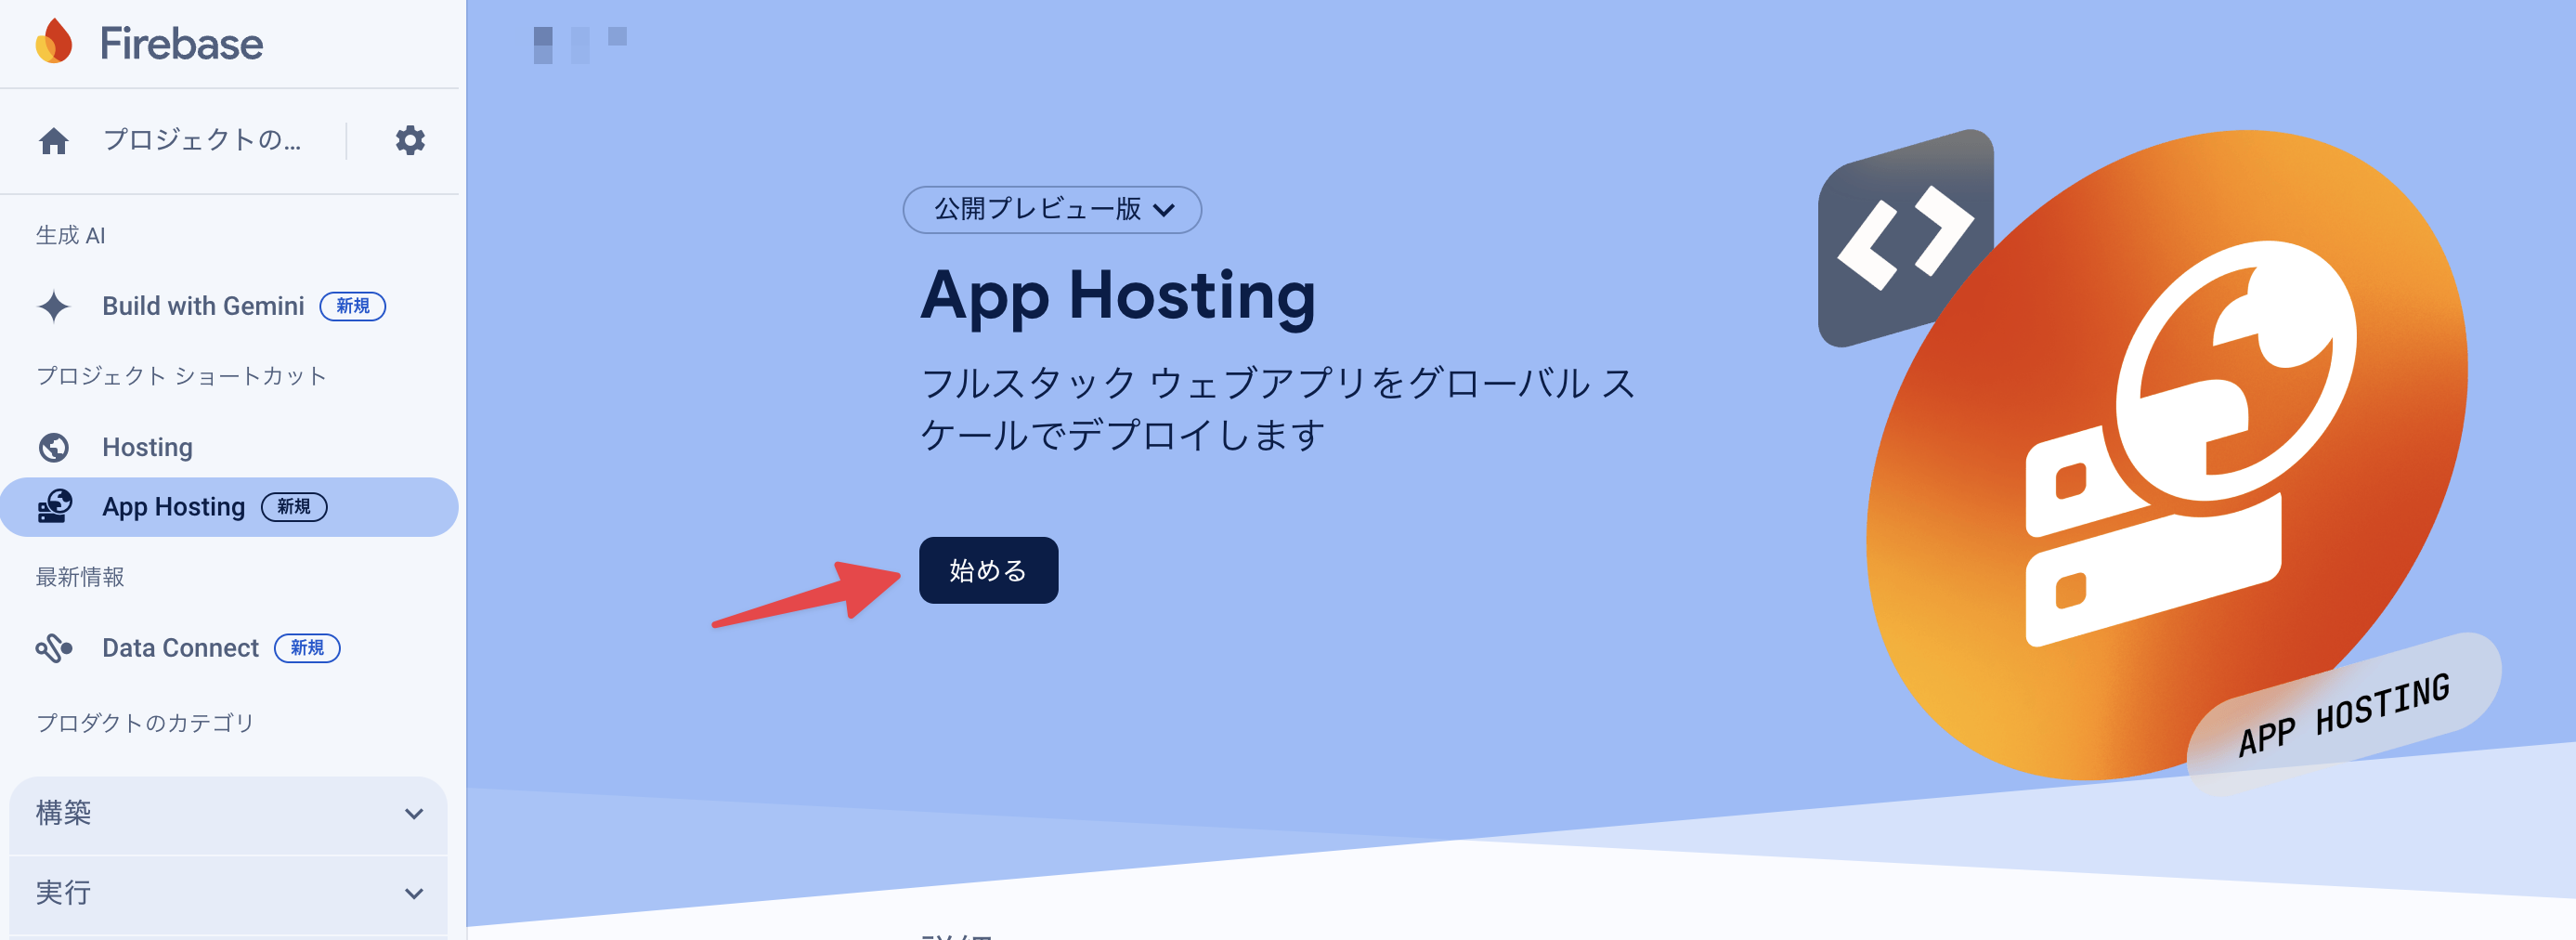 App Hosting画面の初期状態にある「始める」ボタンをクリックする